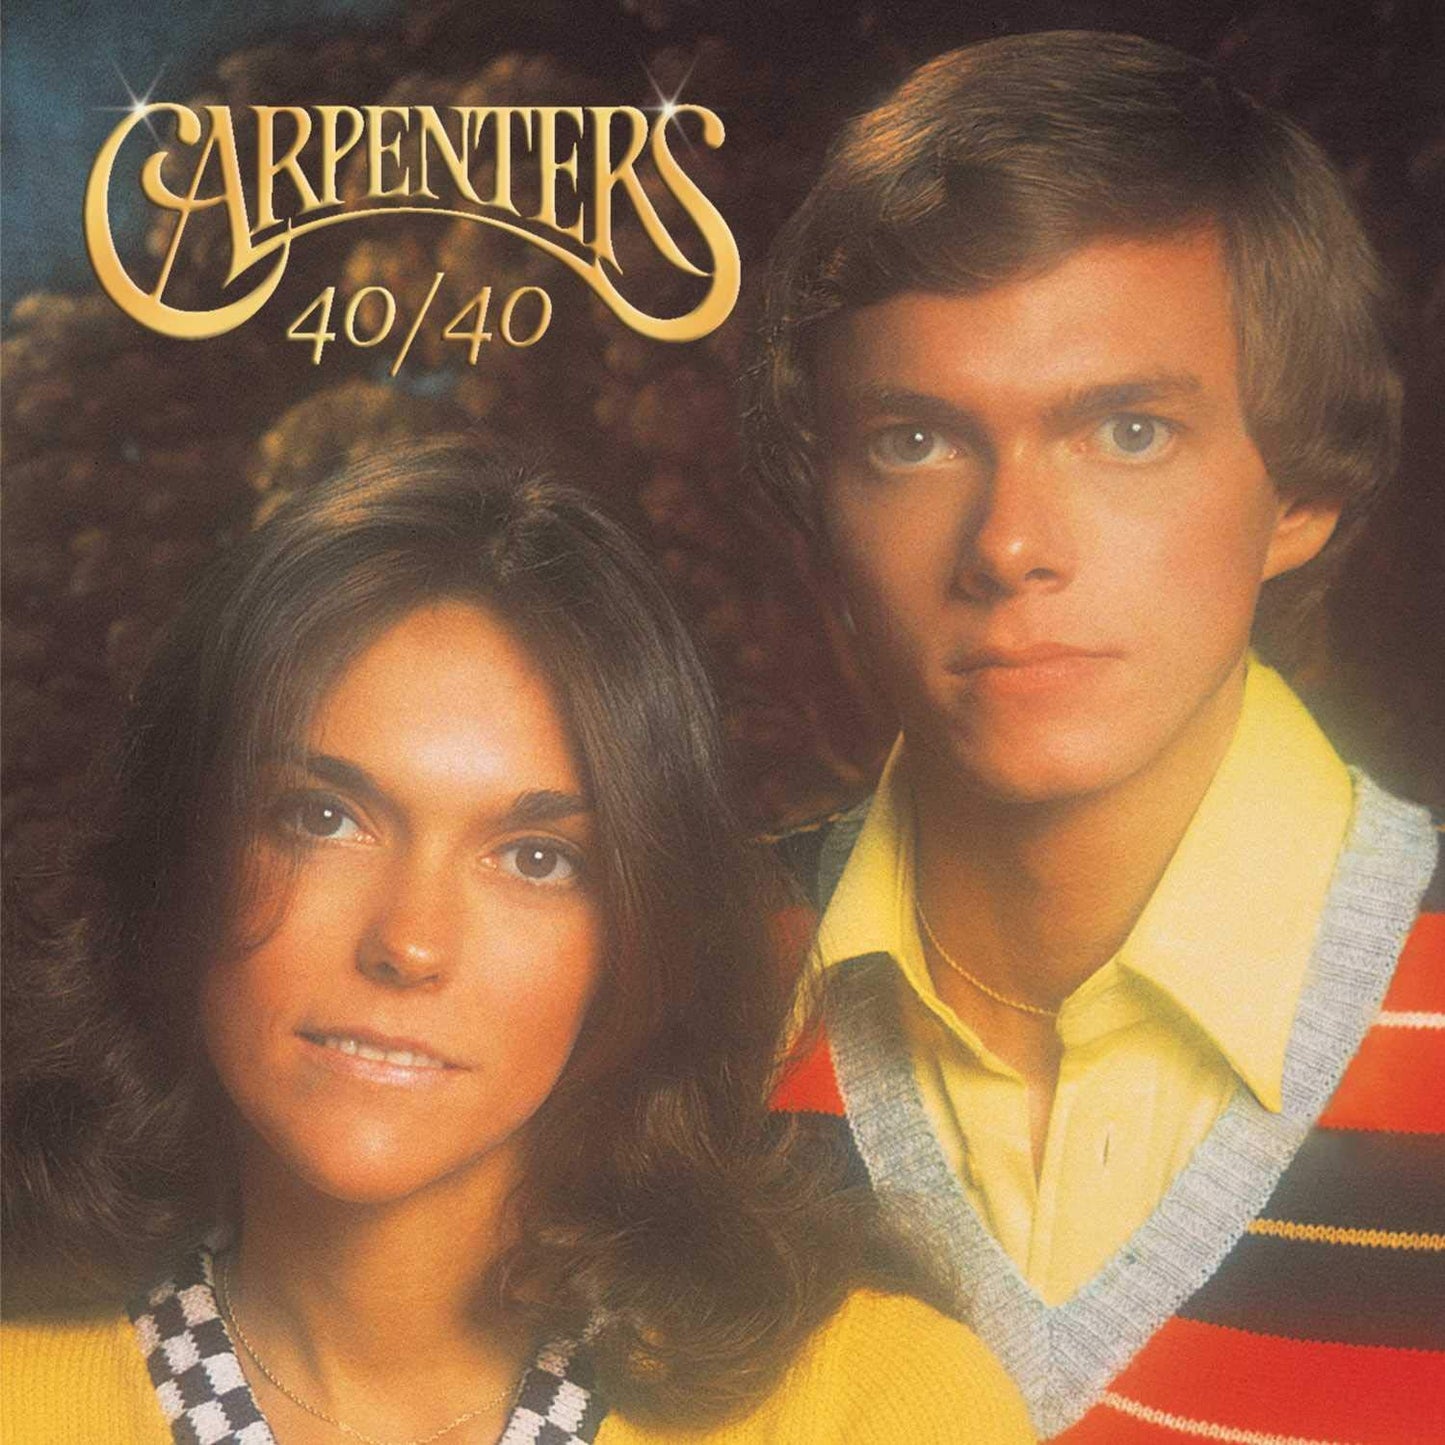 Carpenters, The/40/40 [CD]